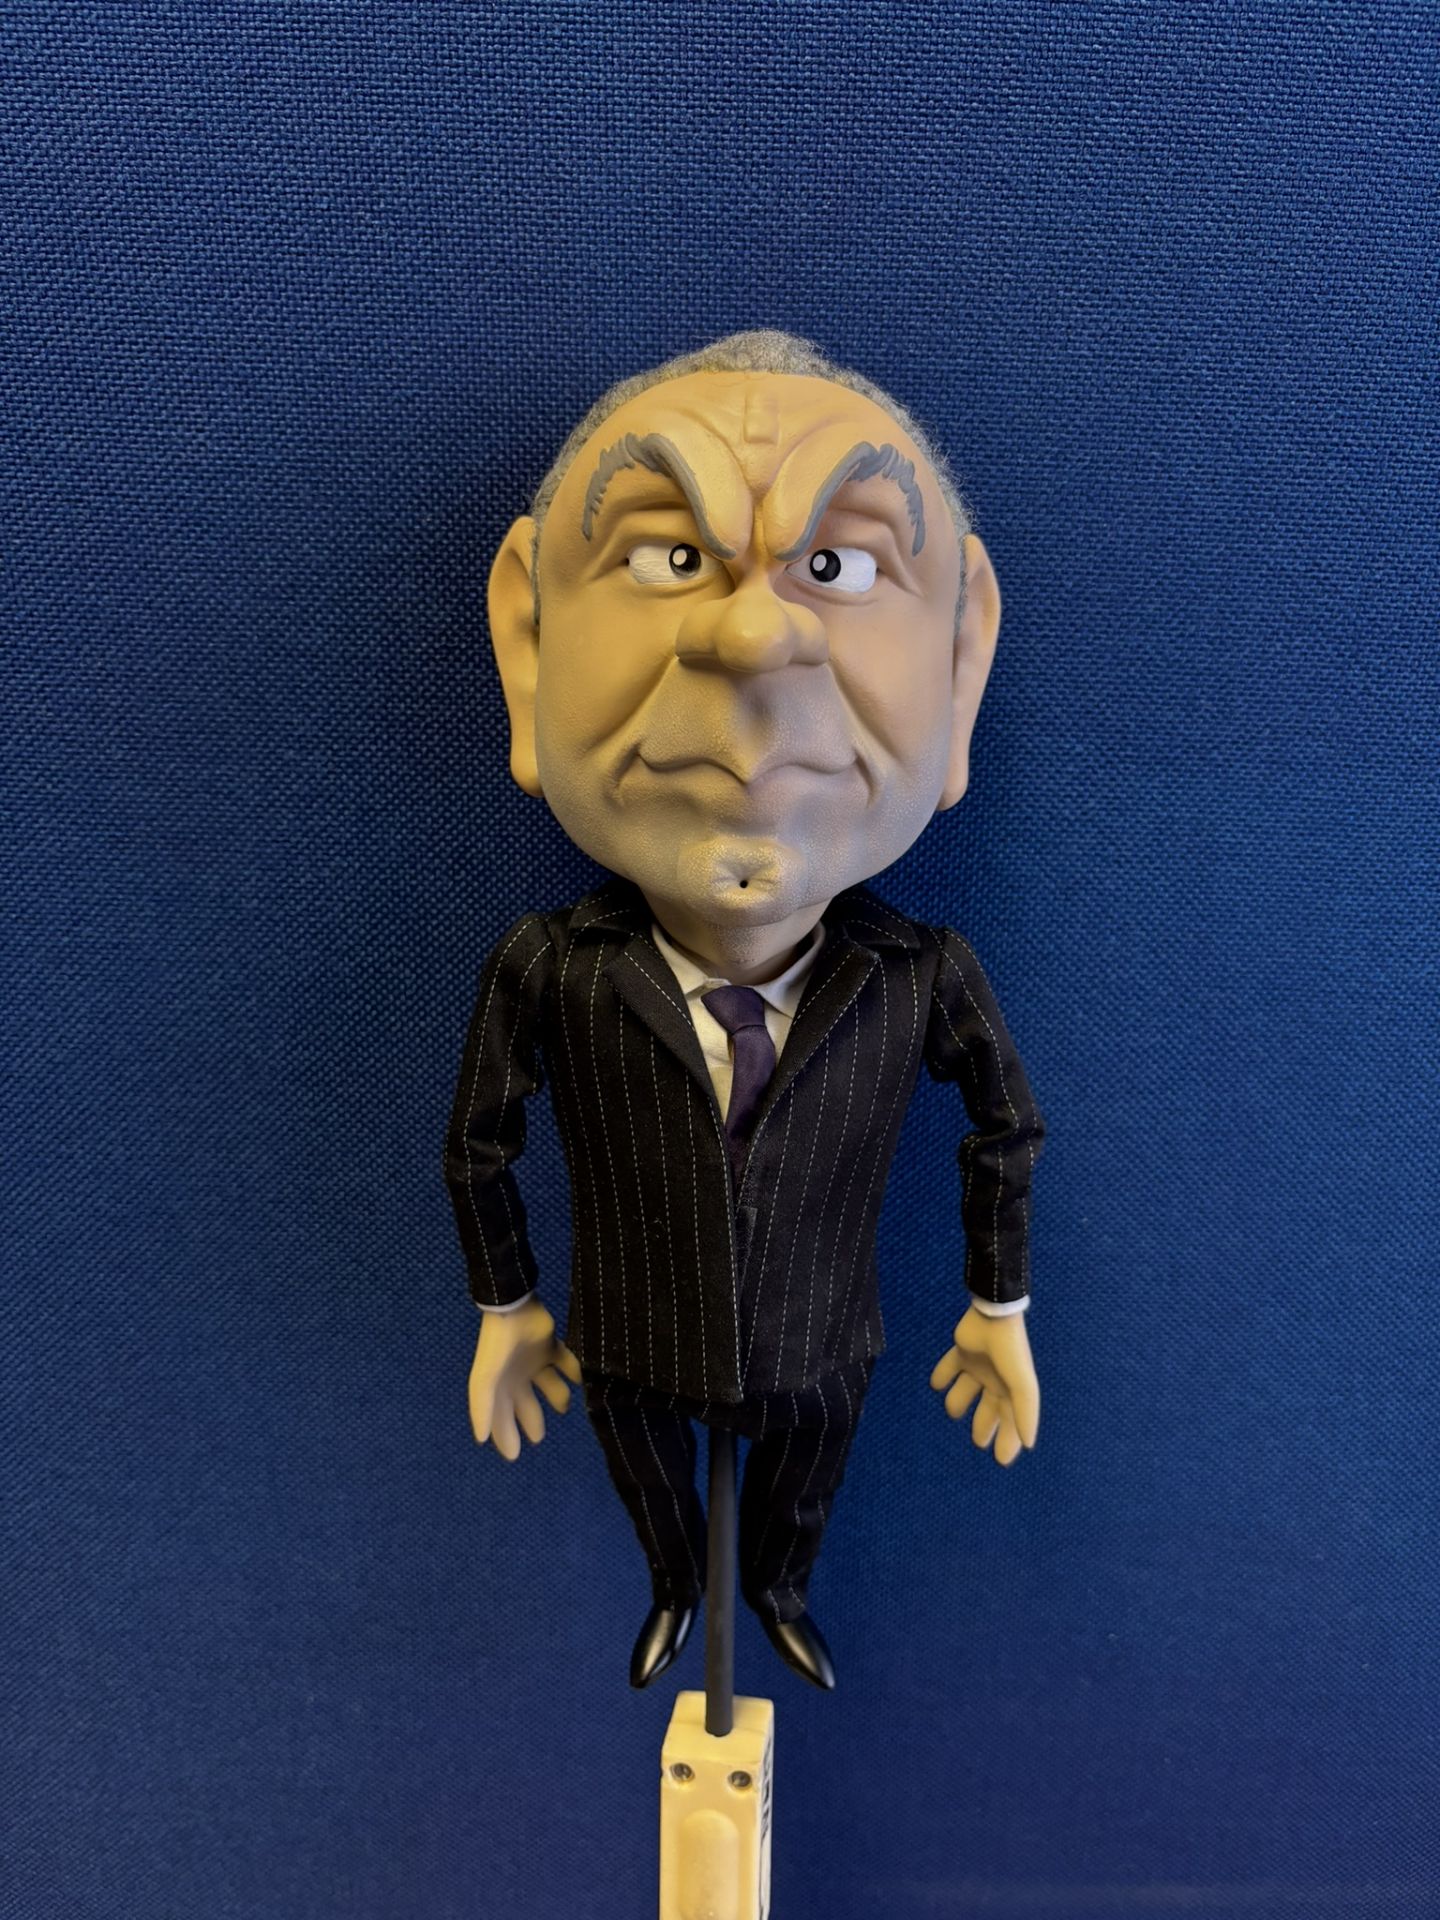 Newzoid puppet - Alan Sugar - Image 2 of 4